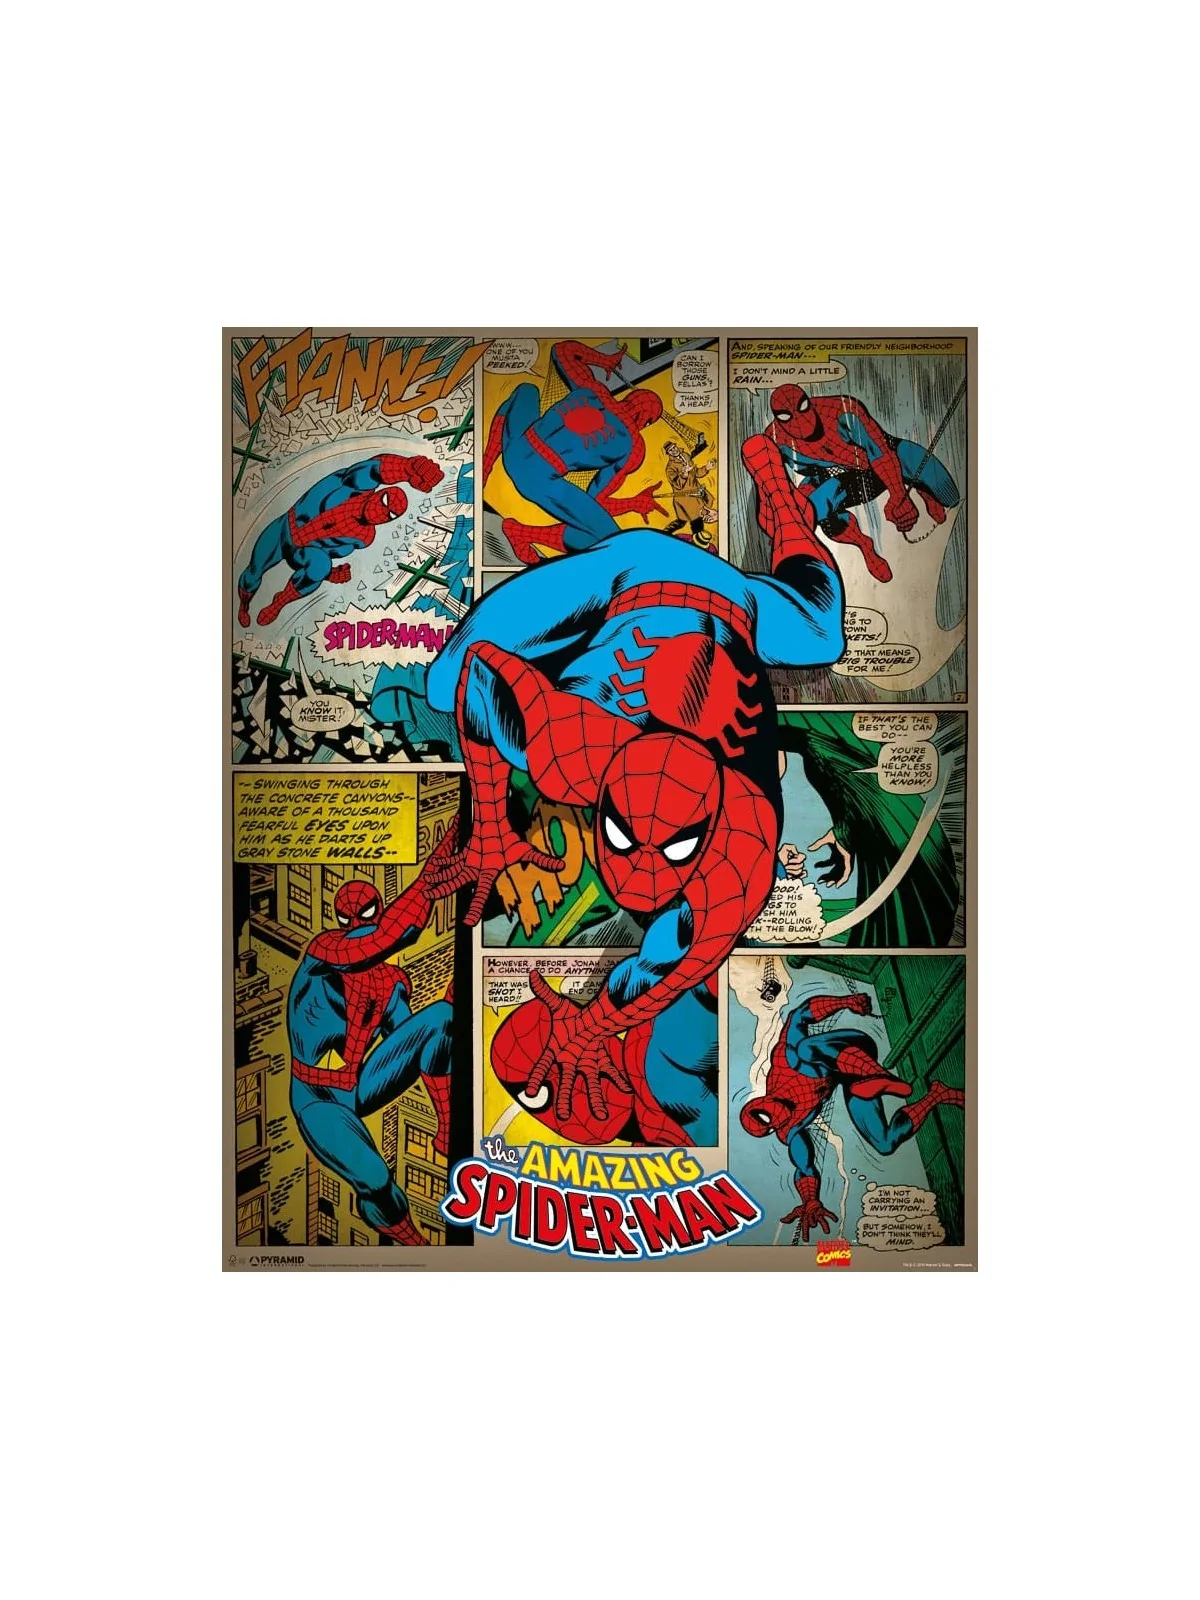 Comprar Marvel Comics Spider-Man Retro 40 x 50 cm barato al mejor prec